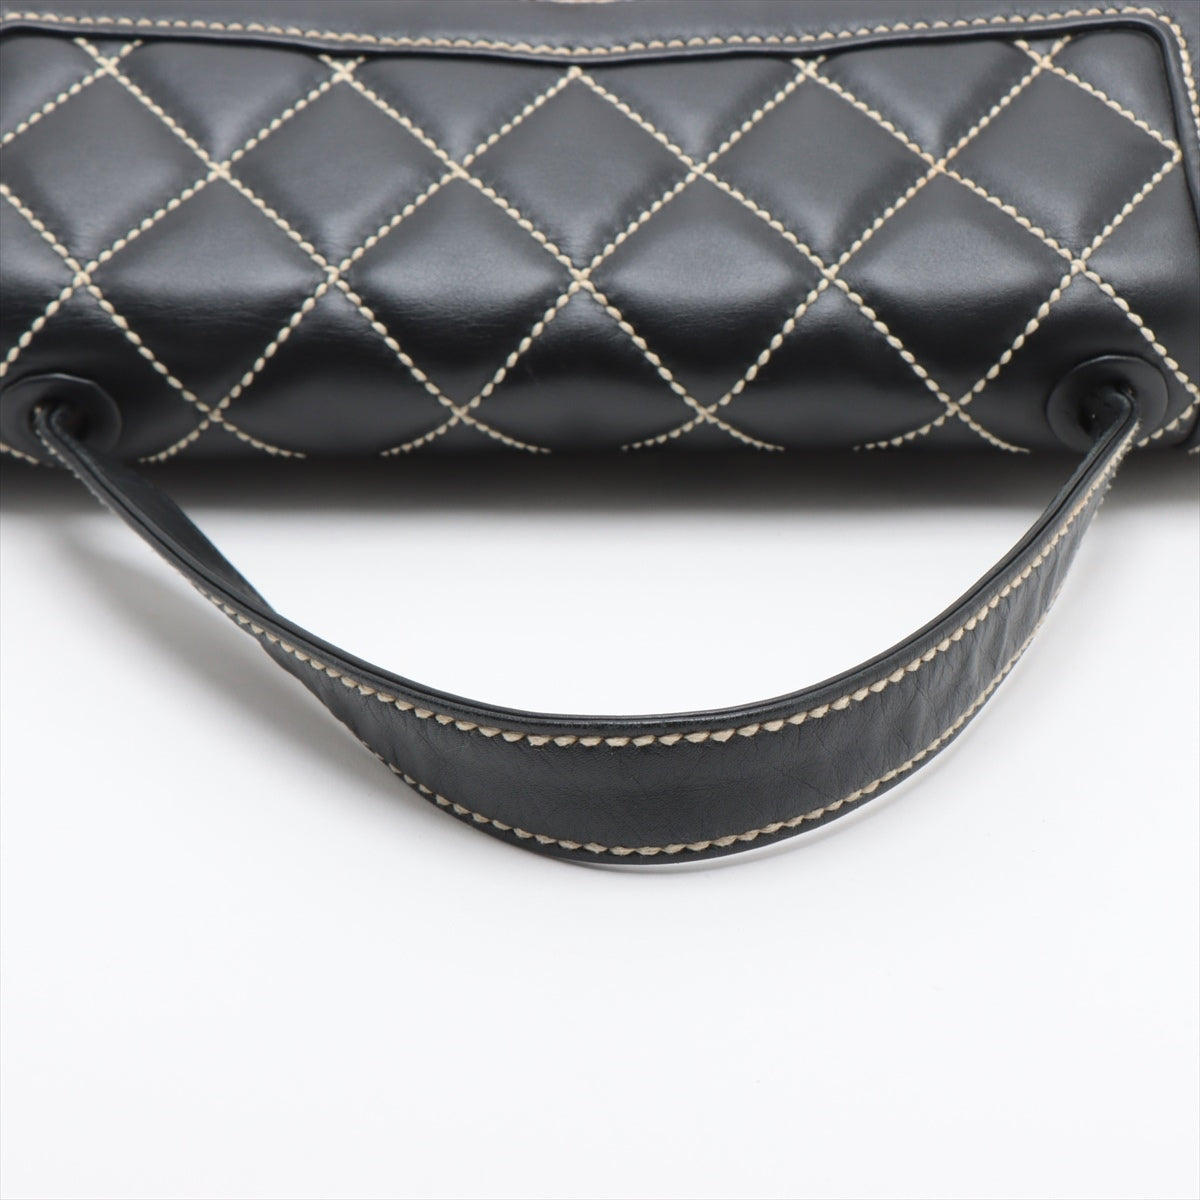 Chanel Wild Stitch Lambskin Handbag Black Gold Metal Fittings 9XXXXXX